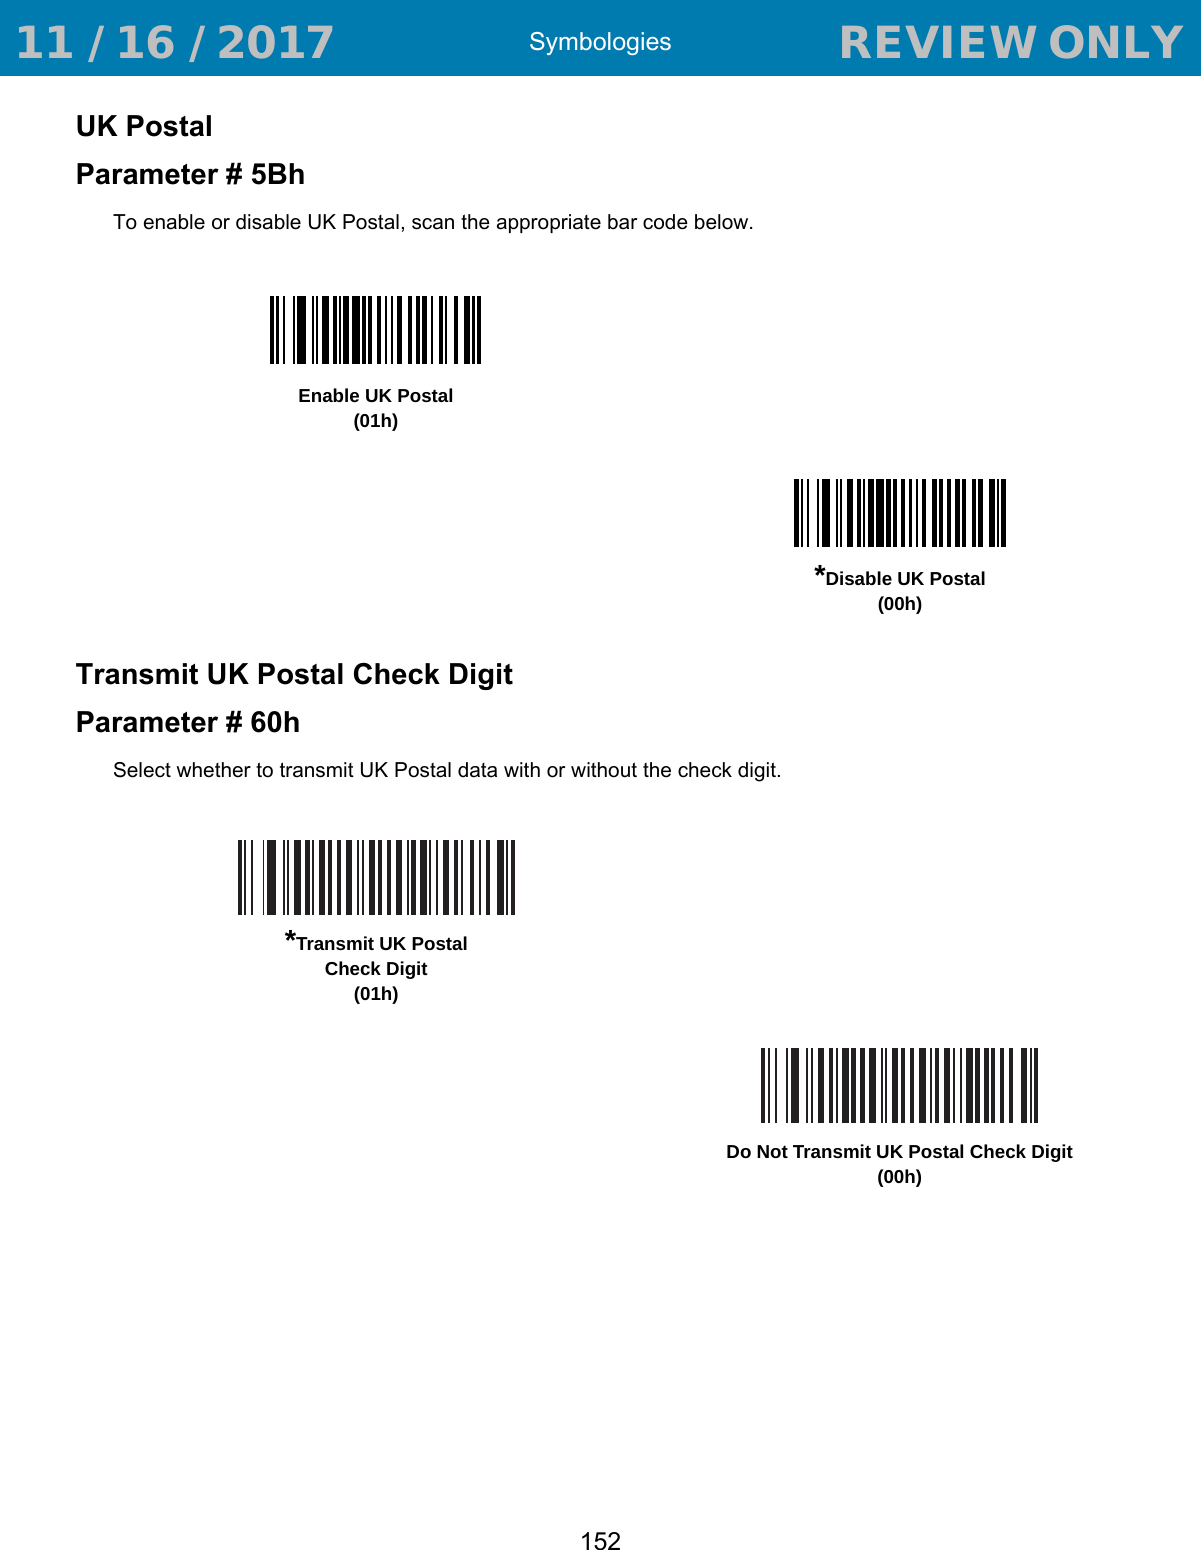 Symbologies152UK PostalParameter # 5BhTo enable or disable UK Postal, scan the appropriate bar code below.Transmit UK Postal Check DigitParameter # 60hSelect whether to transmit UK Postal data with or without the check digit.Enable UK Postal(01h)*Disable UK Postal(00h)*Transmit UK PostalCheck Digit(01h)Do Not Transmit UK Postal Check Digit(00h) 11 / 16 / 2017                                  REVIEW ONLY                             REVIEW ONLY - REVIEW ONLY - REVIEW ONLY